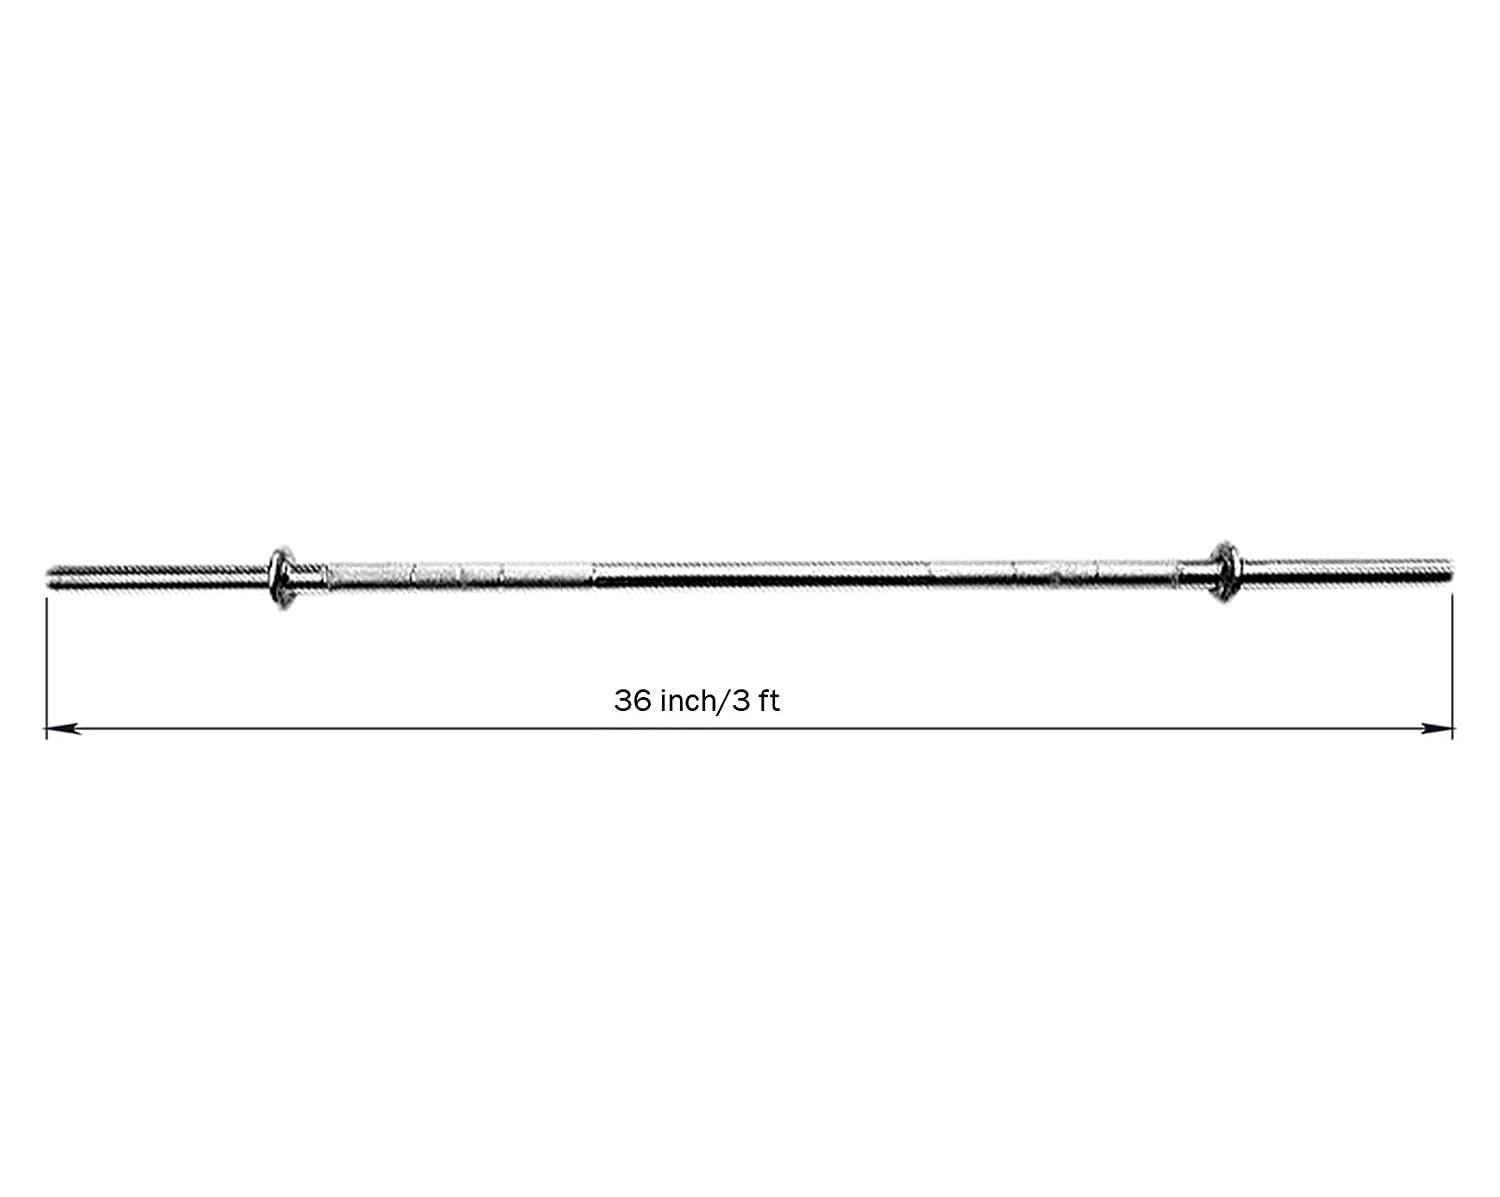 Prokick 3 ft (36 inch) Straight Bar Bell Rod - Best Price online Prokicksports.com